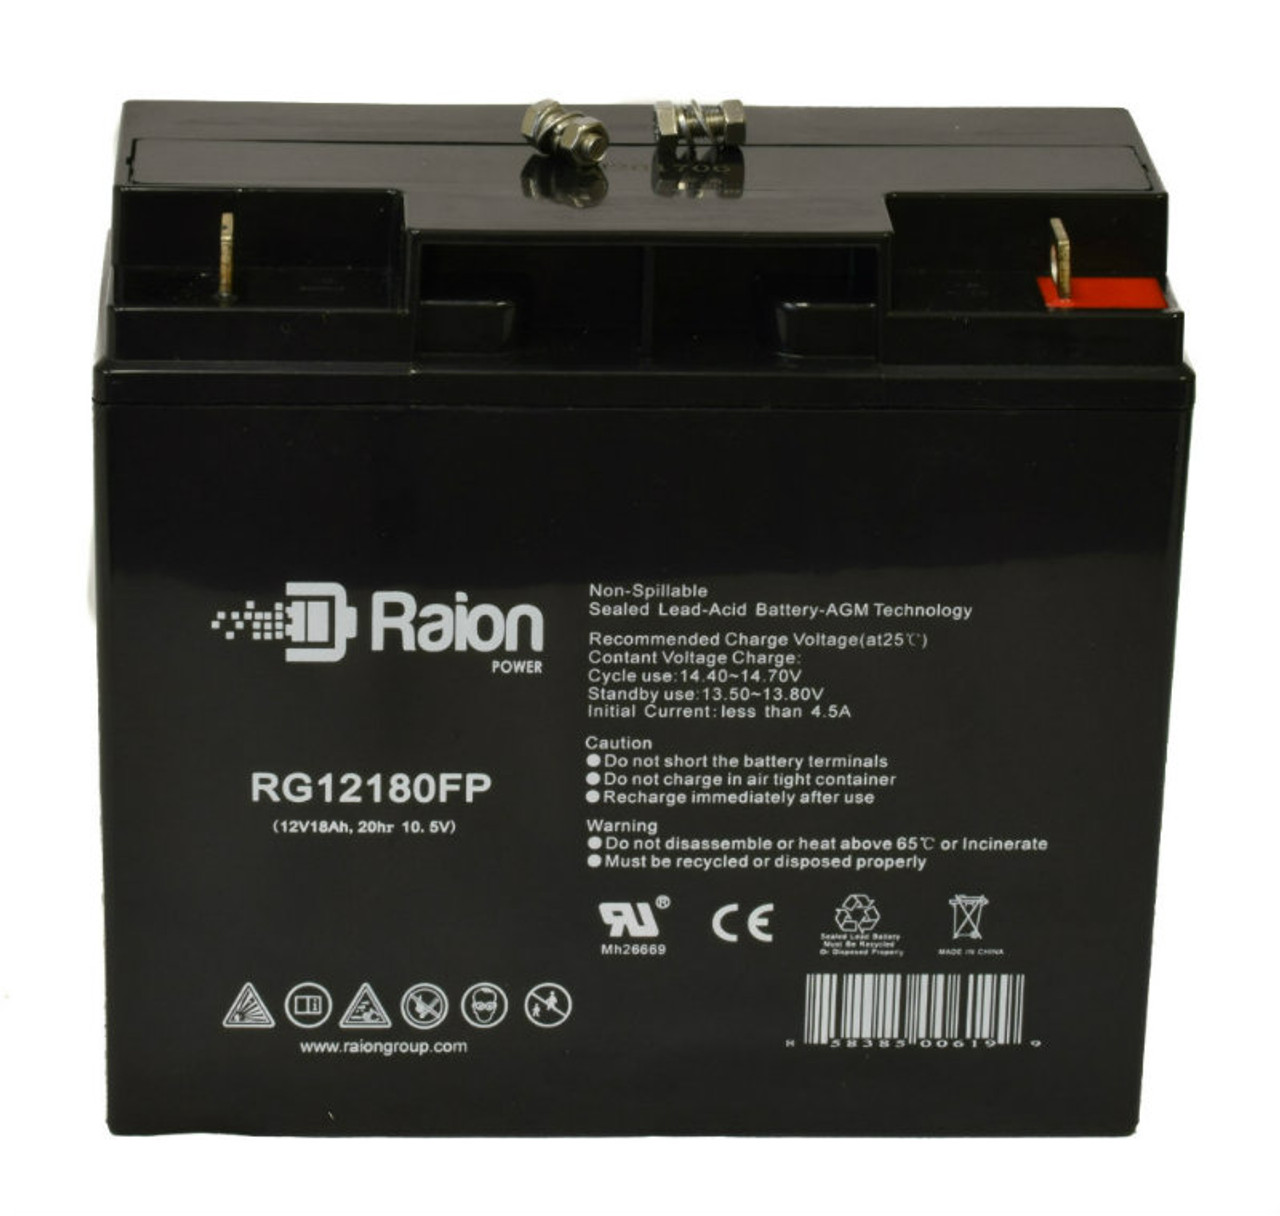 Raion Power RG12180FP 12V 18Ah Lead Acid Battery for Friendly Robotics Robomower STC80101 Lawn Mower